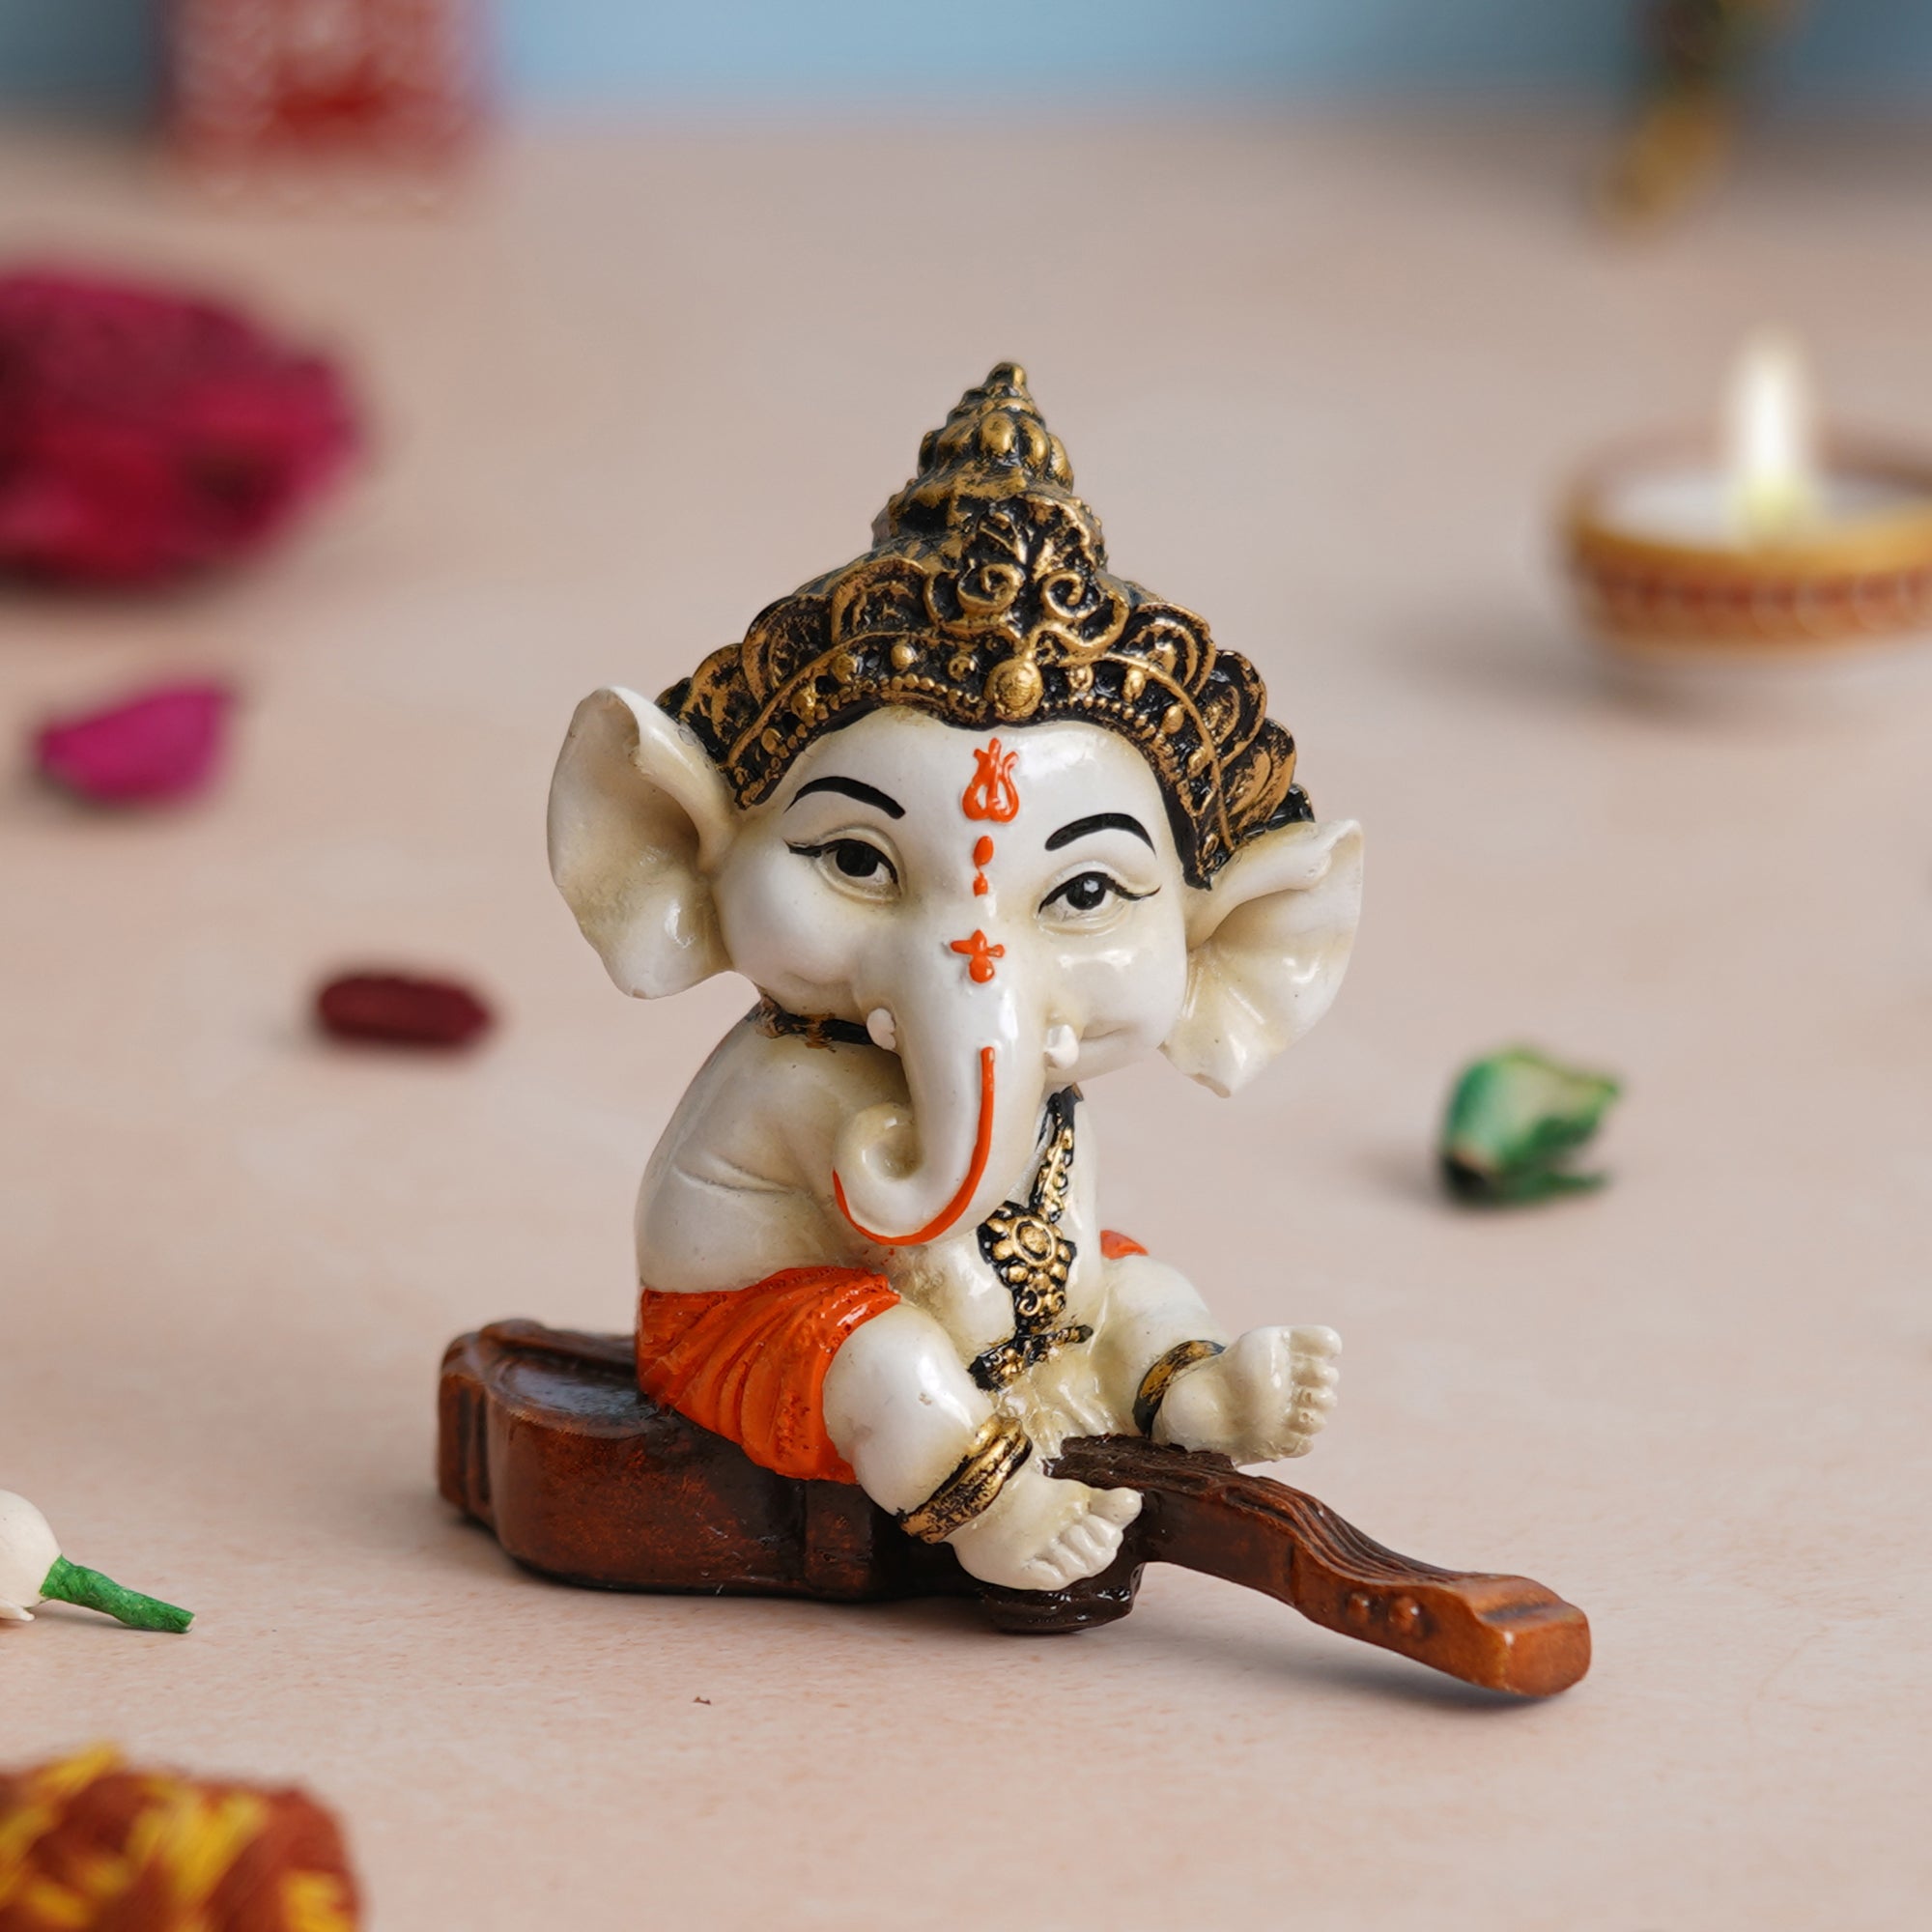 eCraftIndia Orange Polyresin Decorated Lord Ganesha Idol Sitting on Veena Musical Instrument